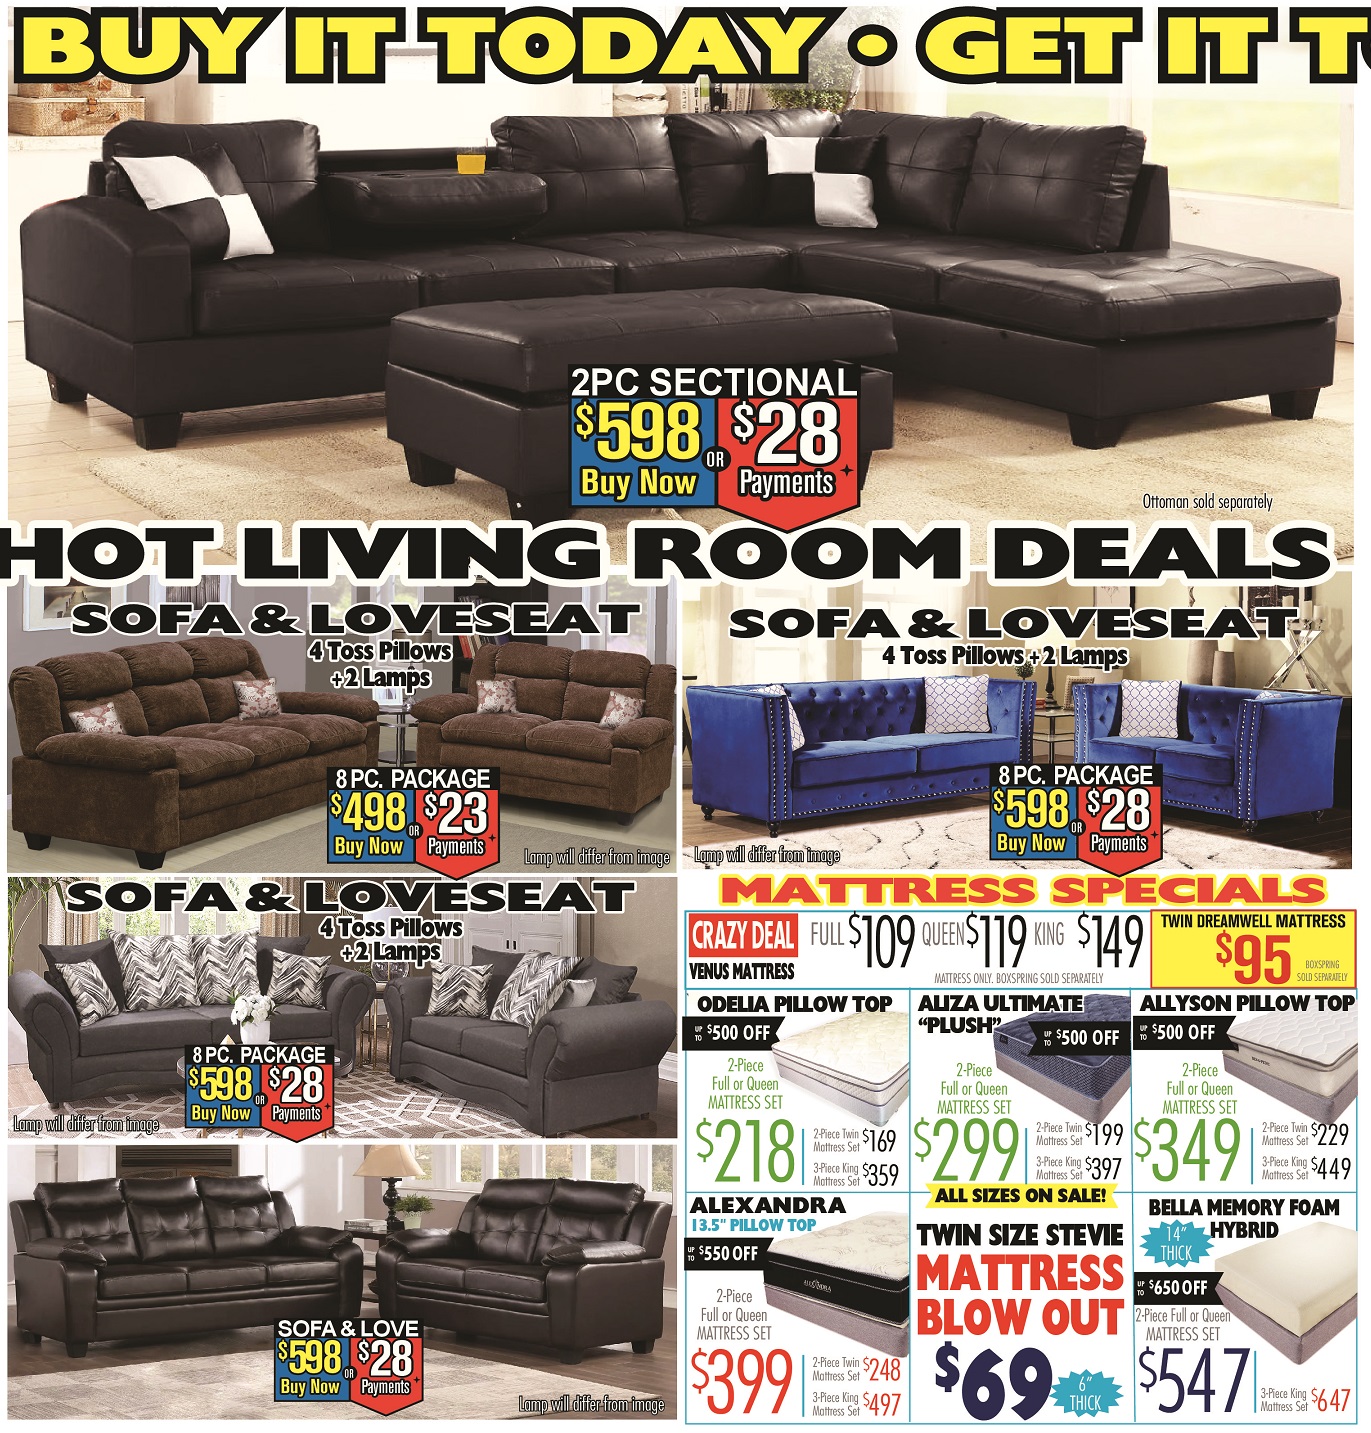 price buster furniture